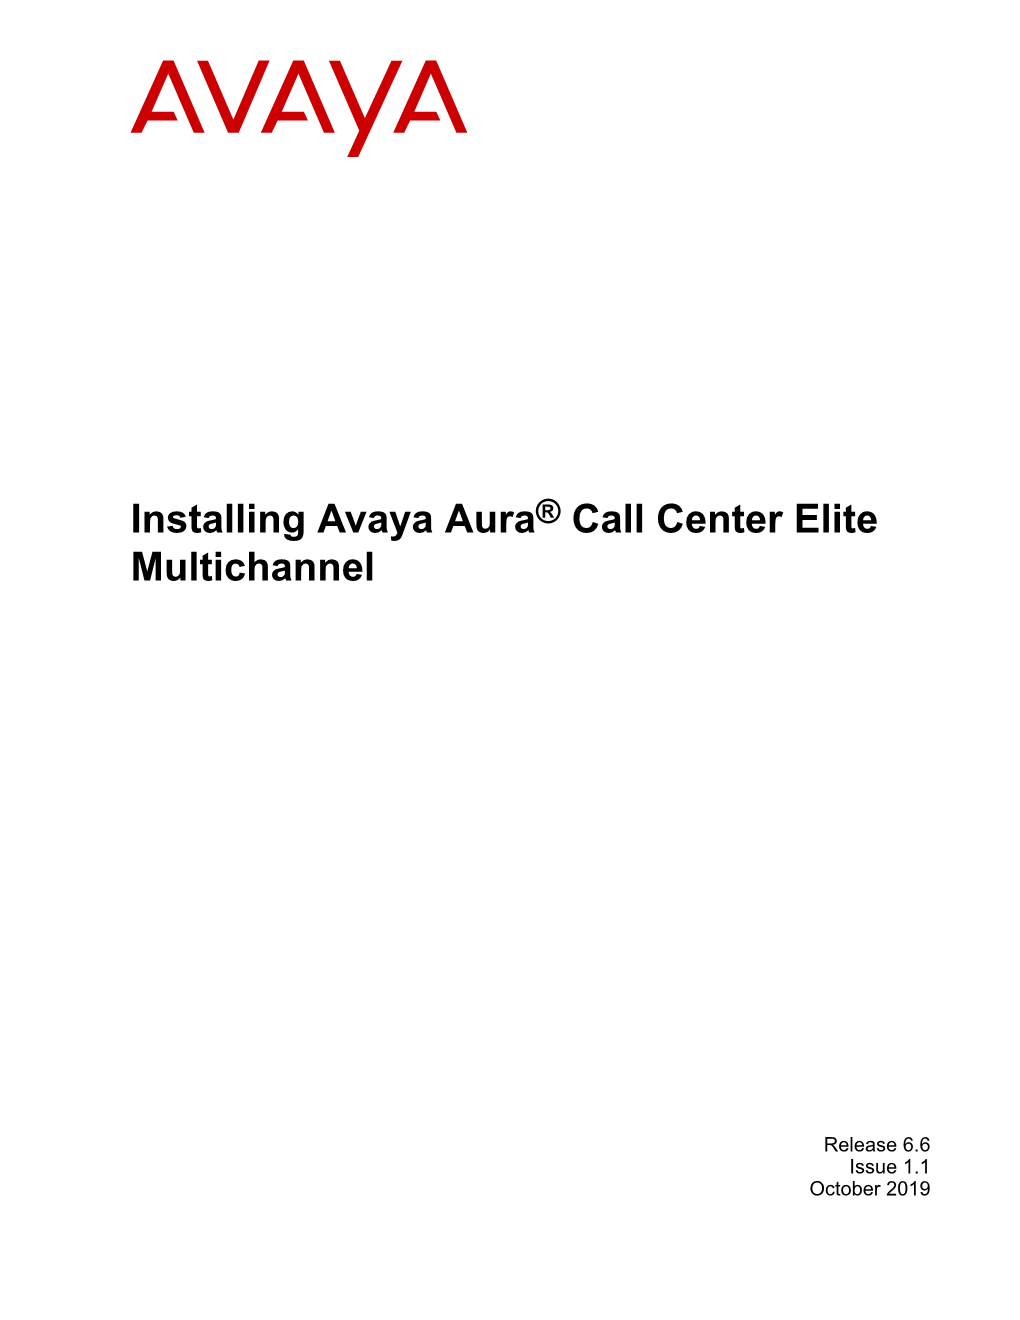 Installing Avaya Aura® Call Center Elite Multichannel